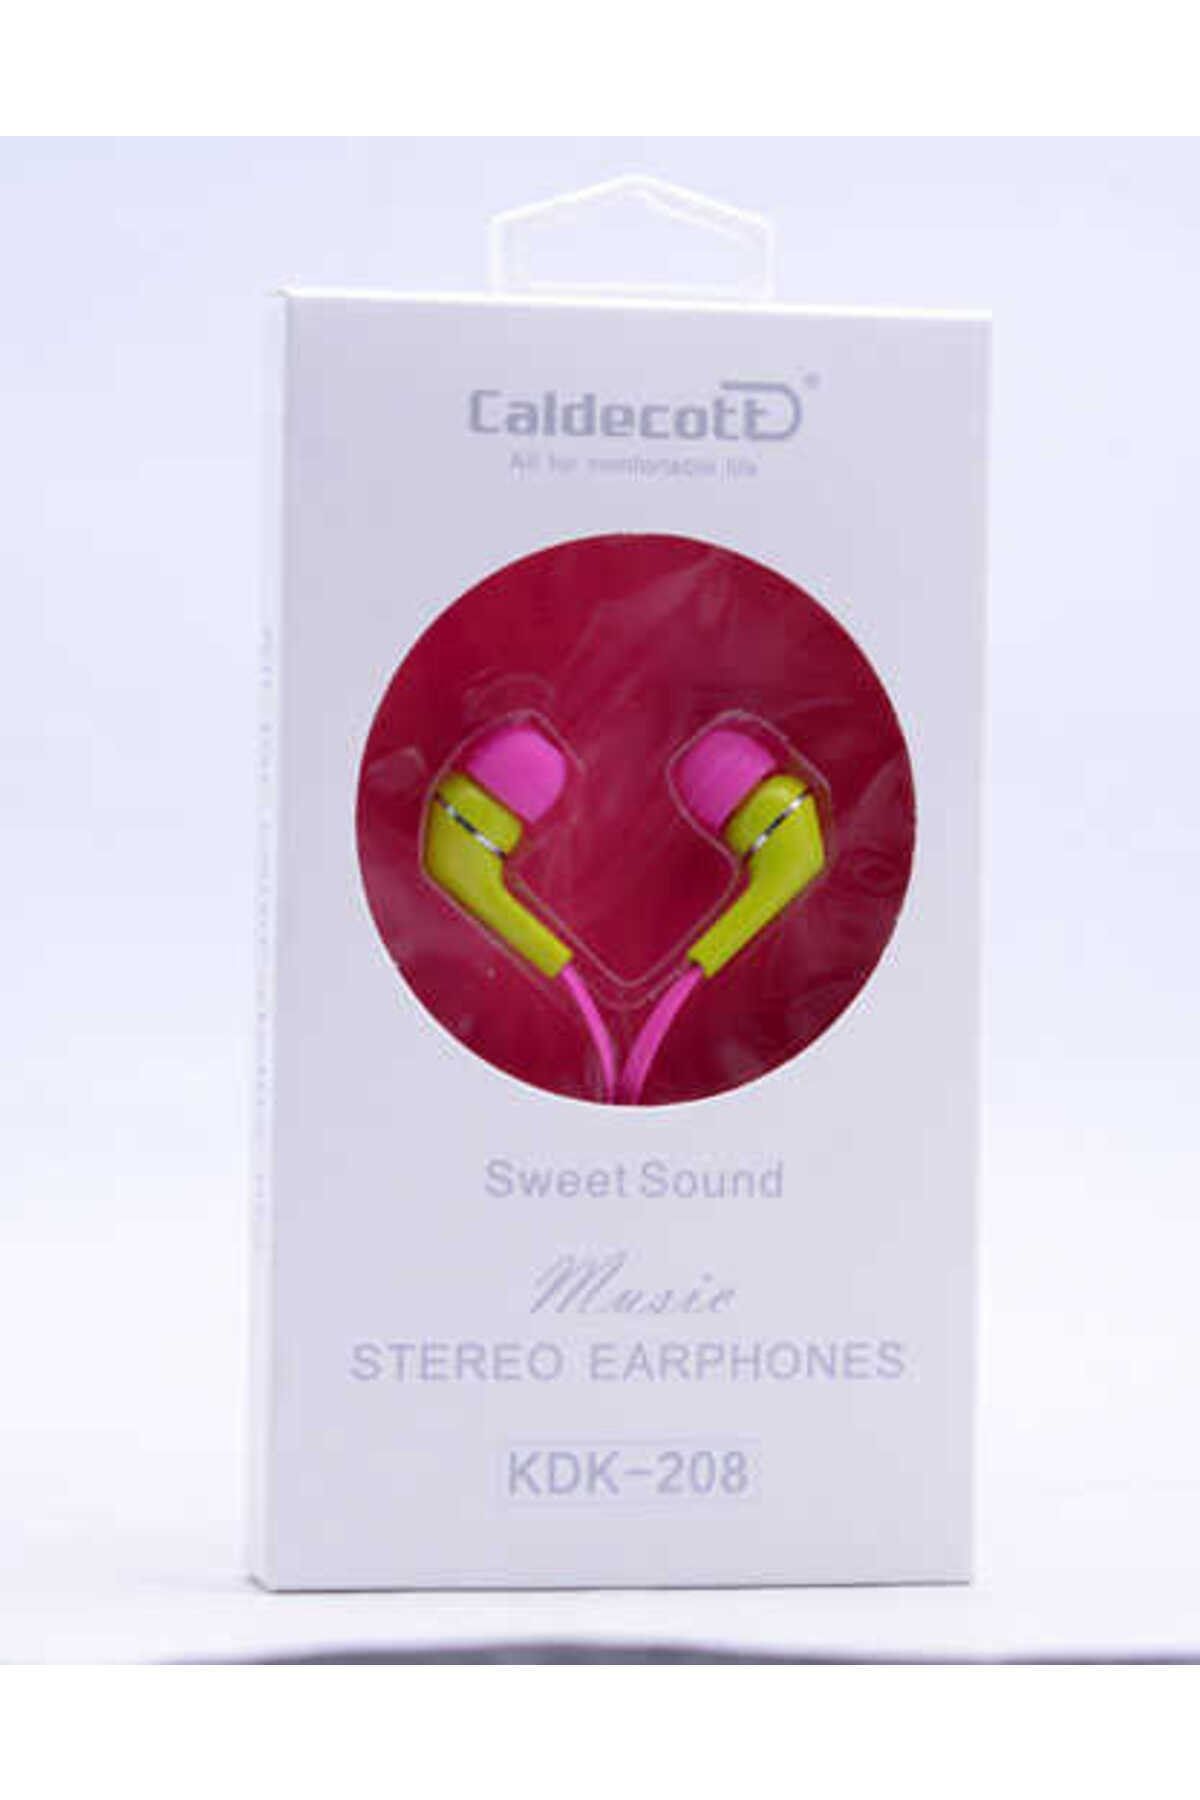 HEPTEKİLETİŞİM Yüksek Kalite ve Ses Performanslı Kulaklık (Caldecott KDK-208 Mp3 Stereo Kulaklık)